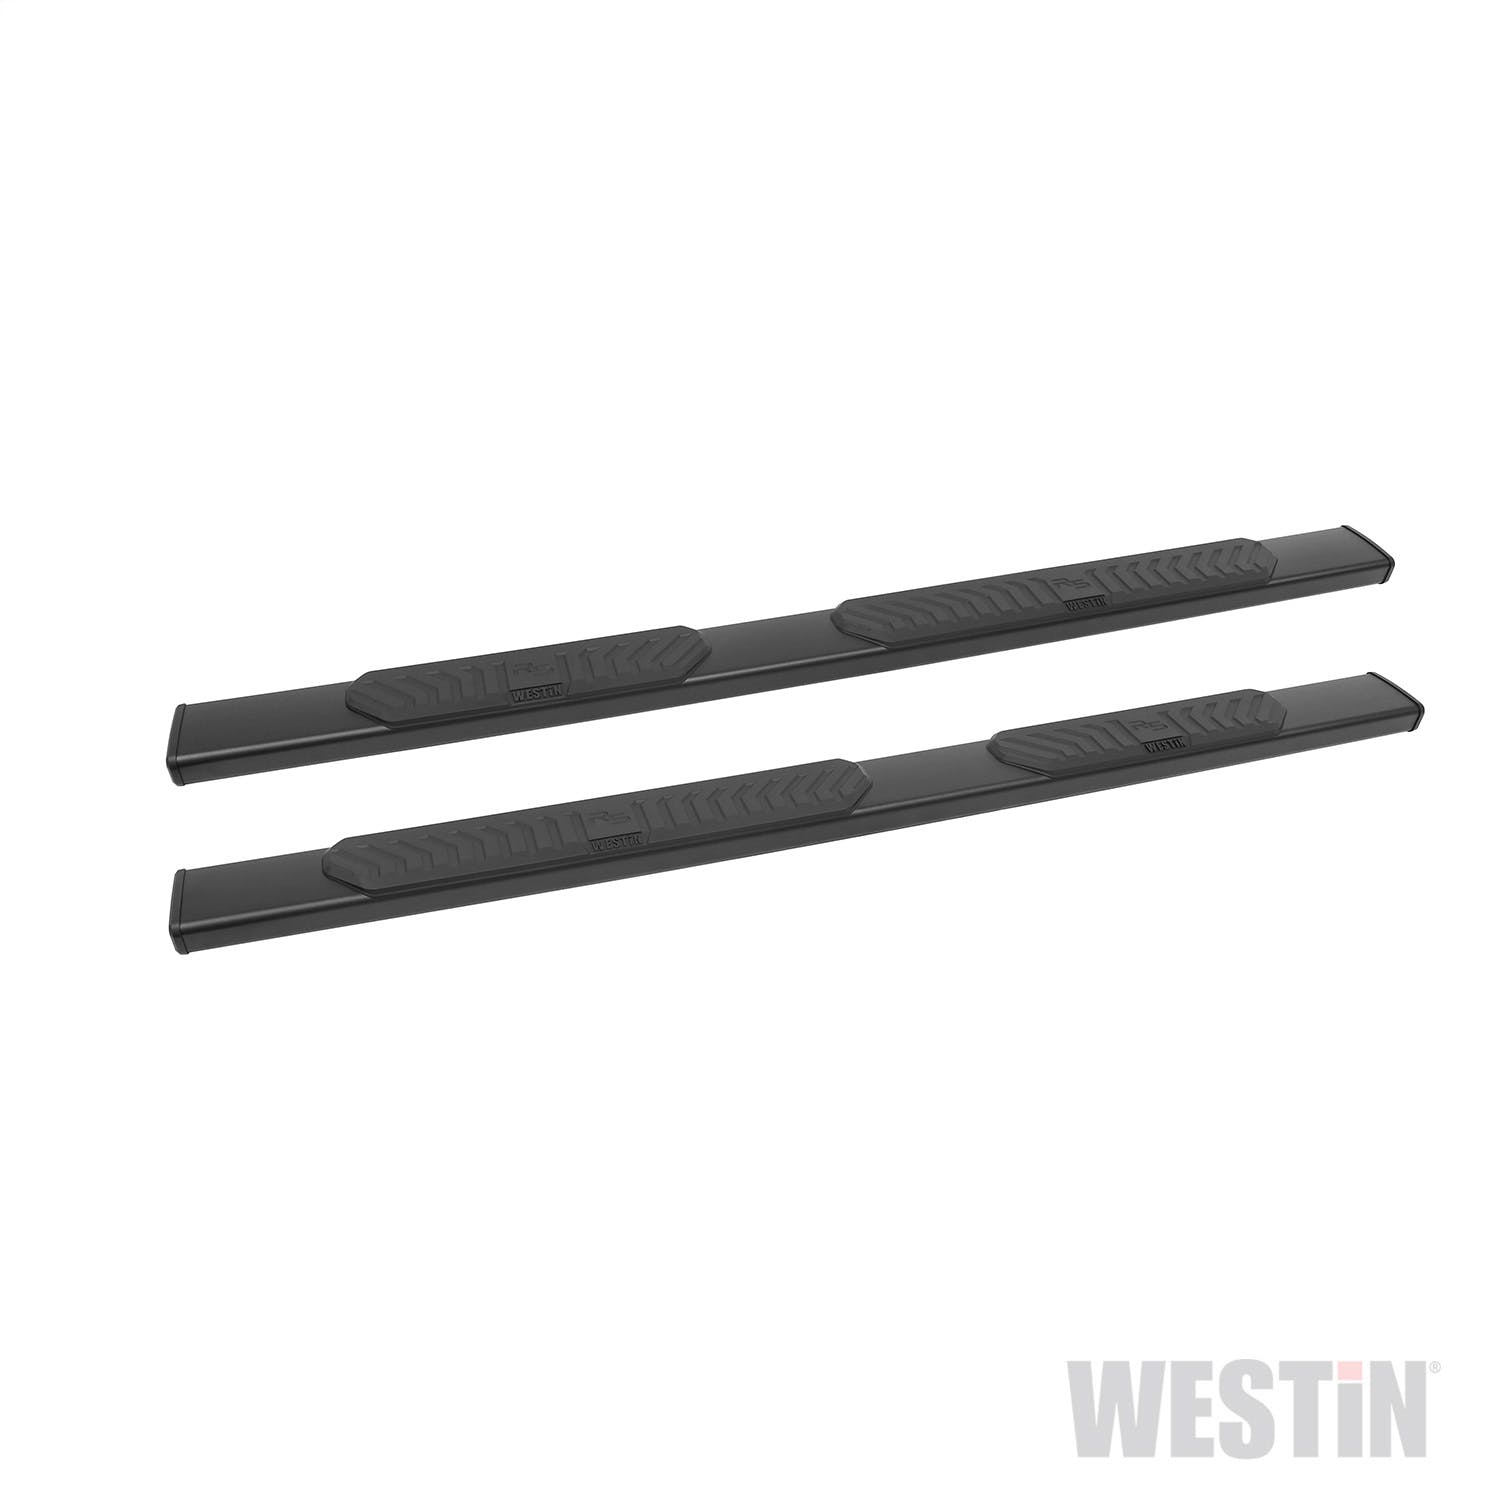 Westin Automotive 28-51035 R5 Nerf Step Bars Black